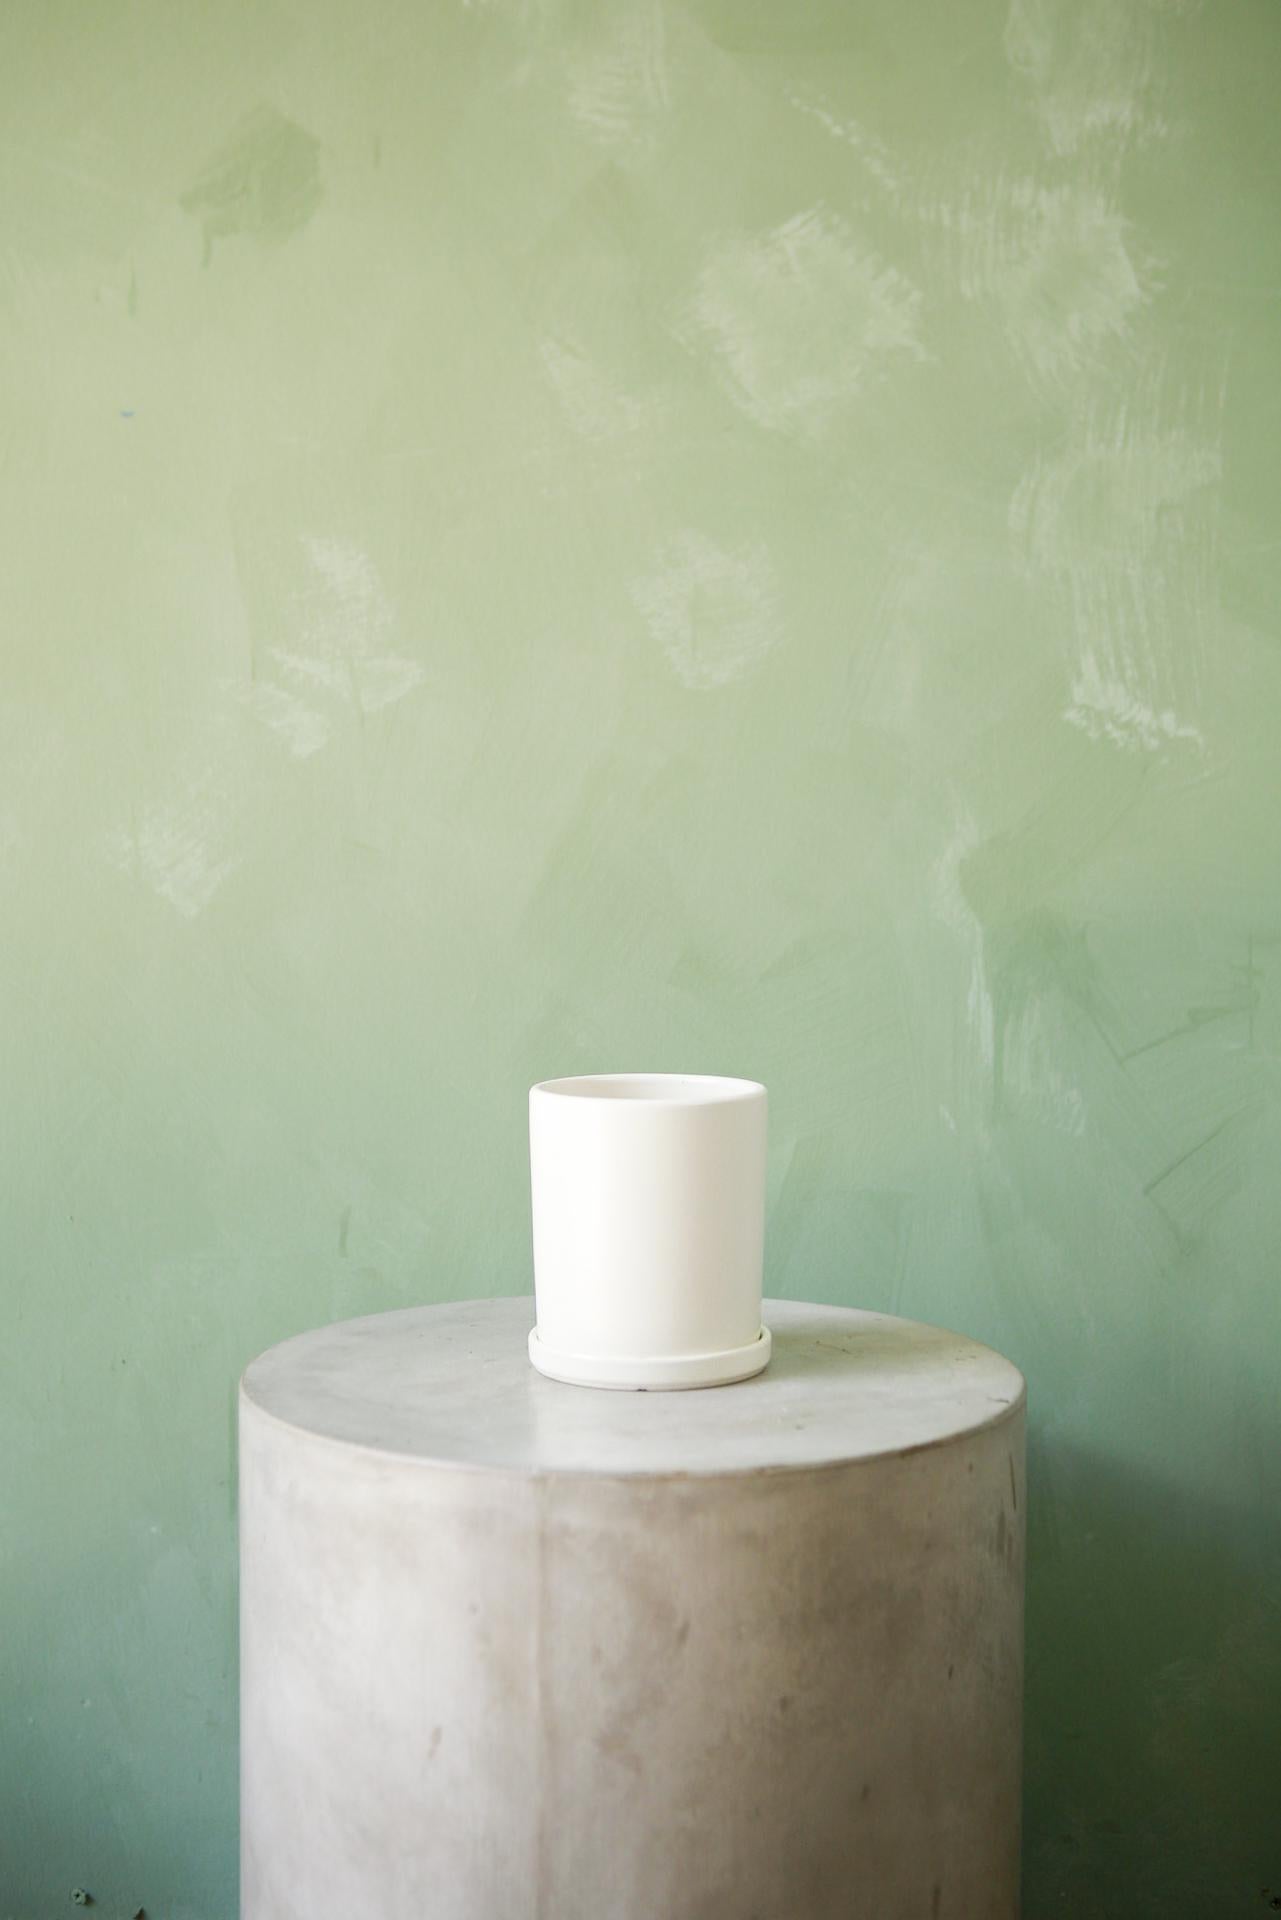 Ceramic Cylinder with Saucer